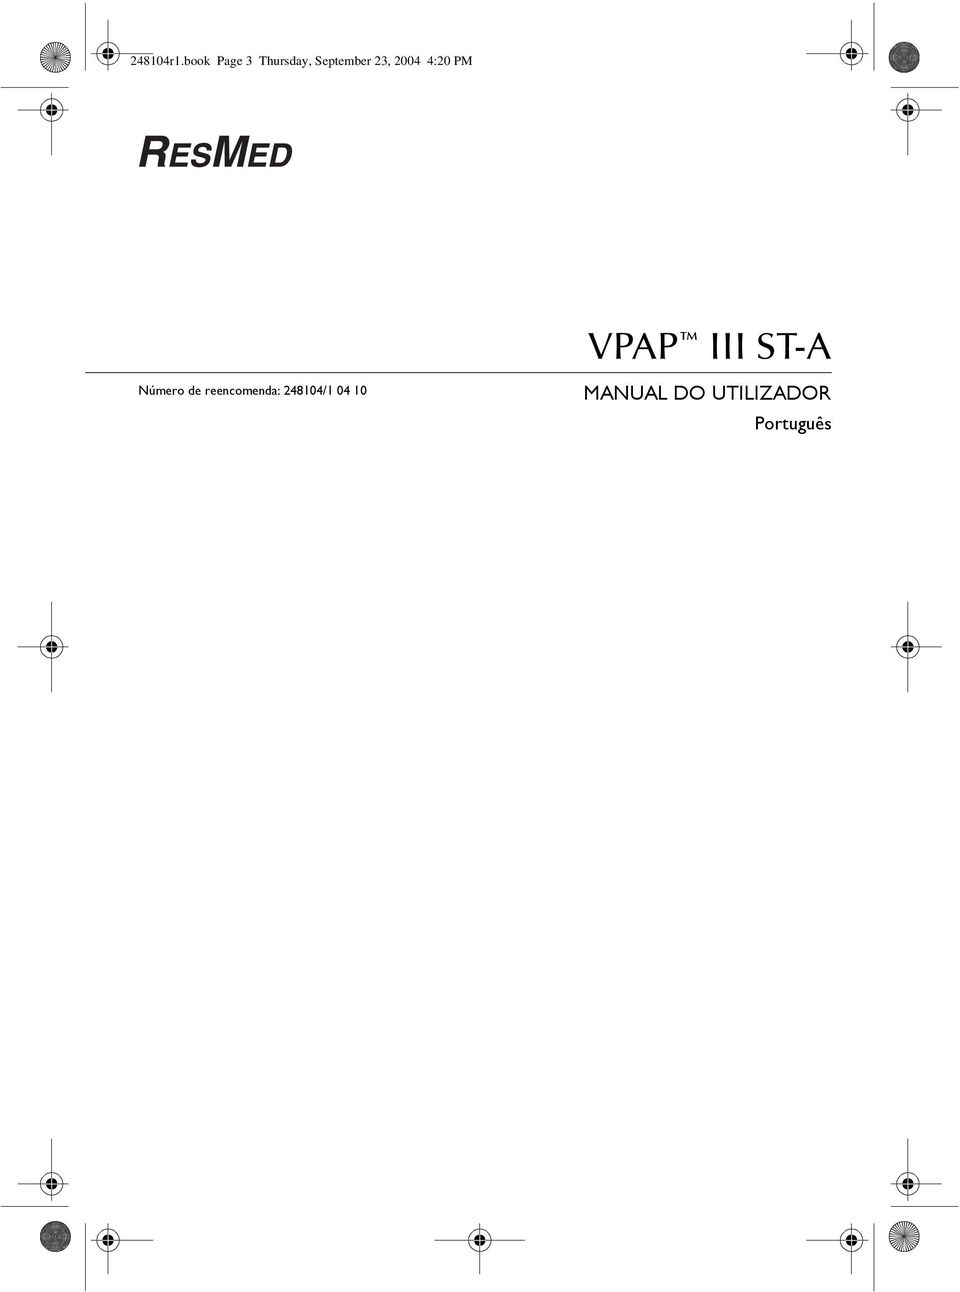 23, 2004 4:20 PM VPAP III ST-A